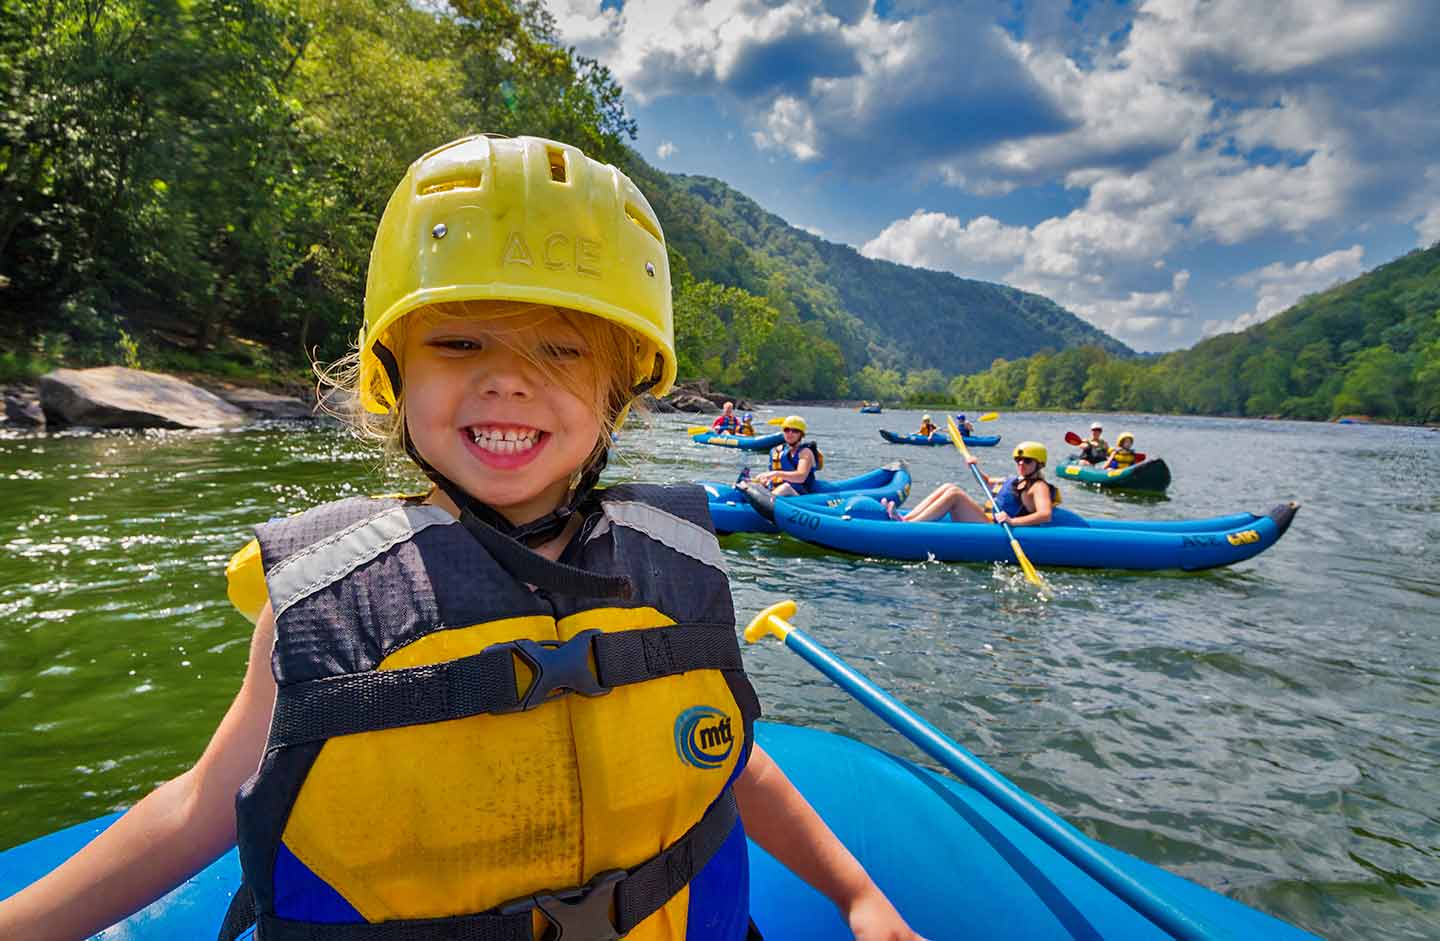 Upper New River Rafting, Full Day – Kids Raft FREE!*